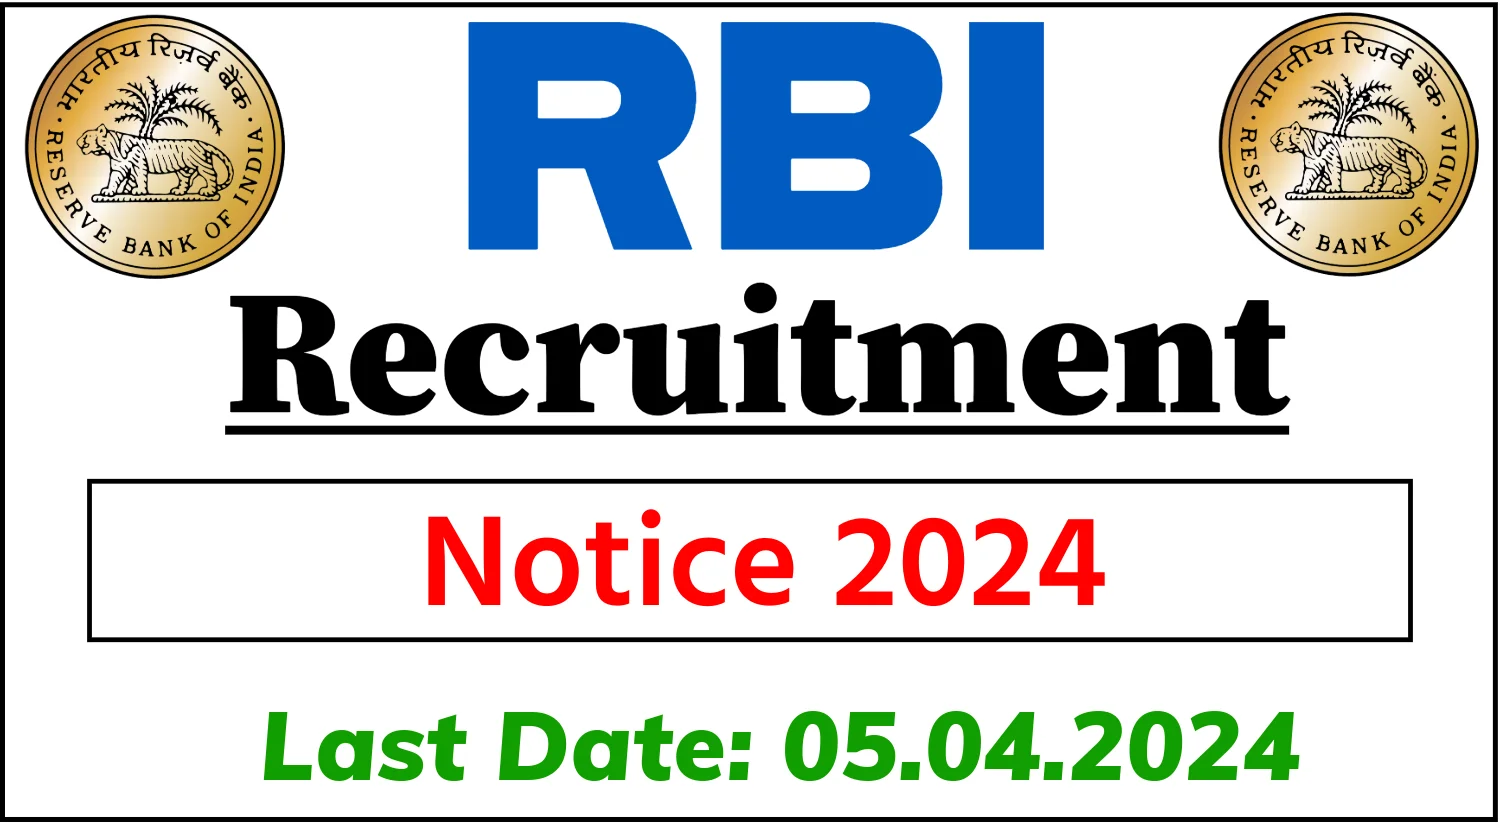 RBI Recruitment 2024